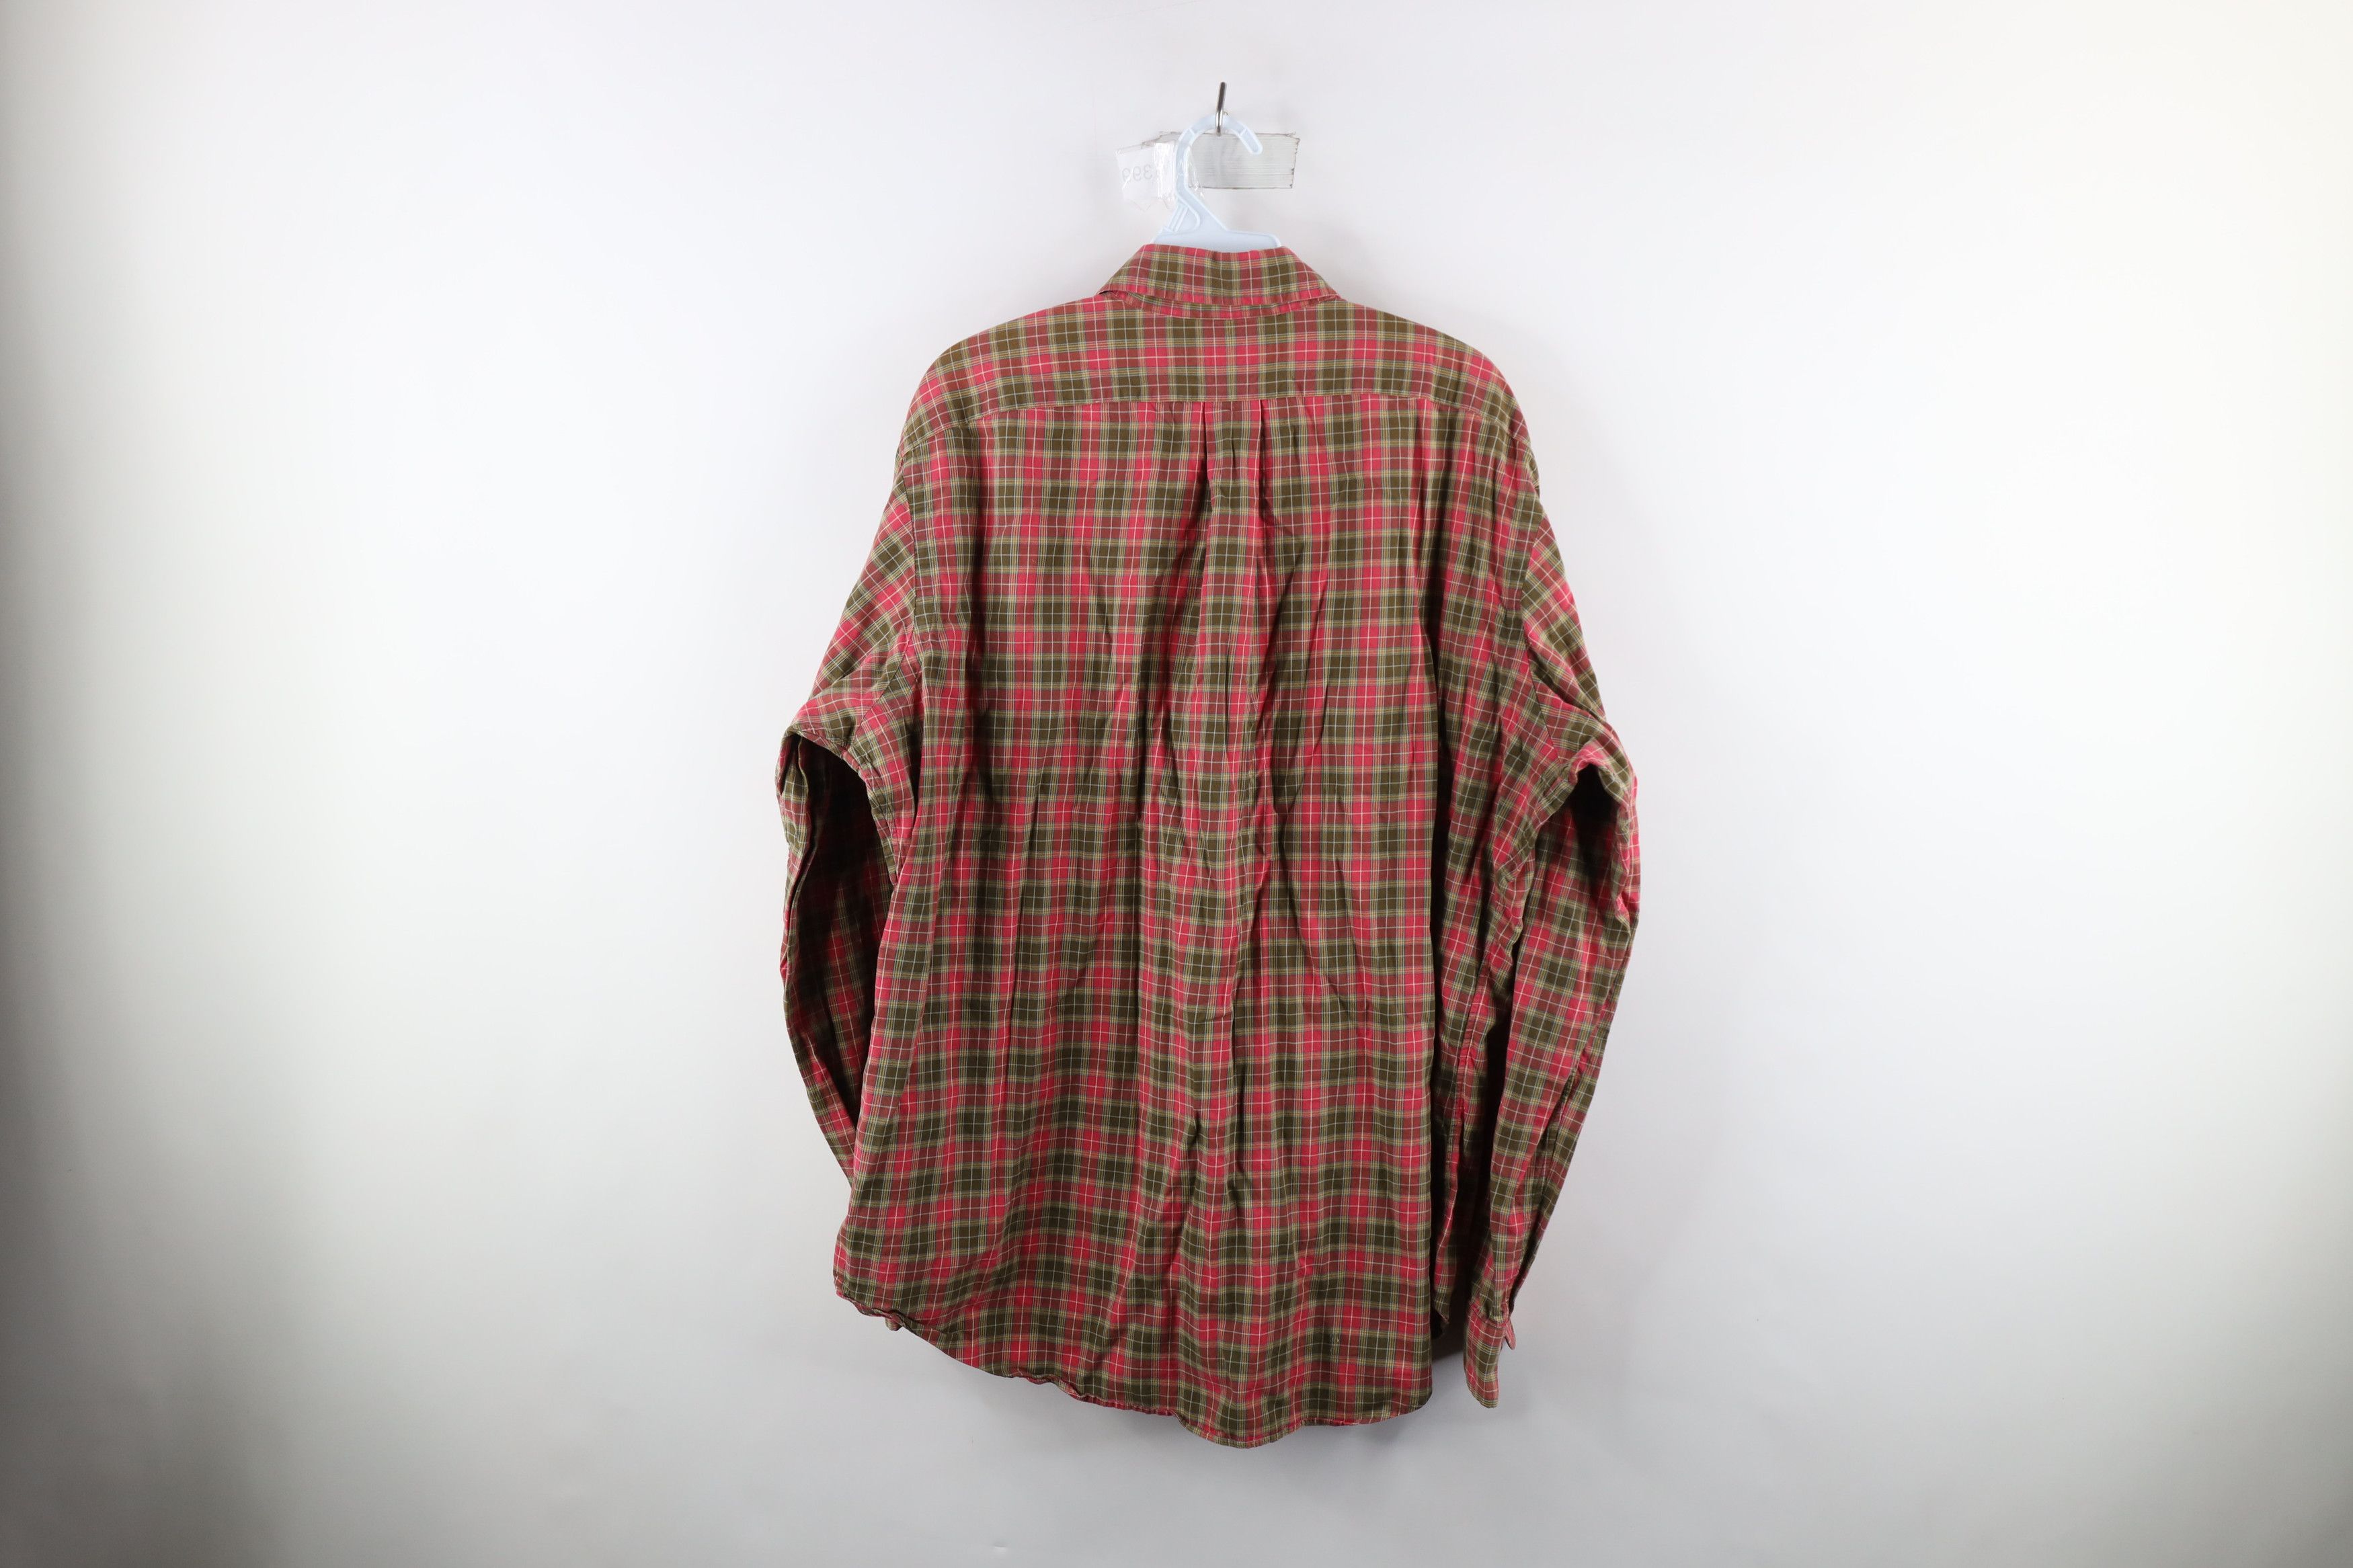 Ralph Lauren Vintage 90s Ralph Lauren Faded Collared Button Down Shirt Size US L / EU 52-54 / 3 - 6 Thumbnail